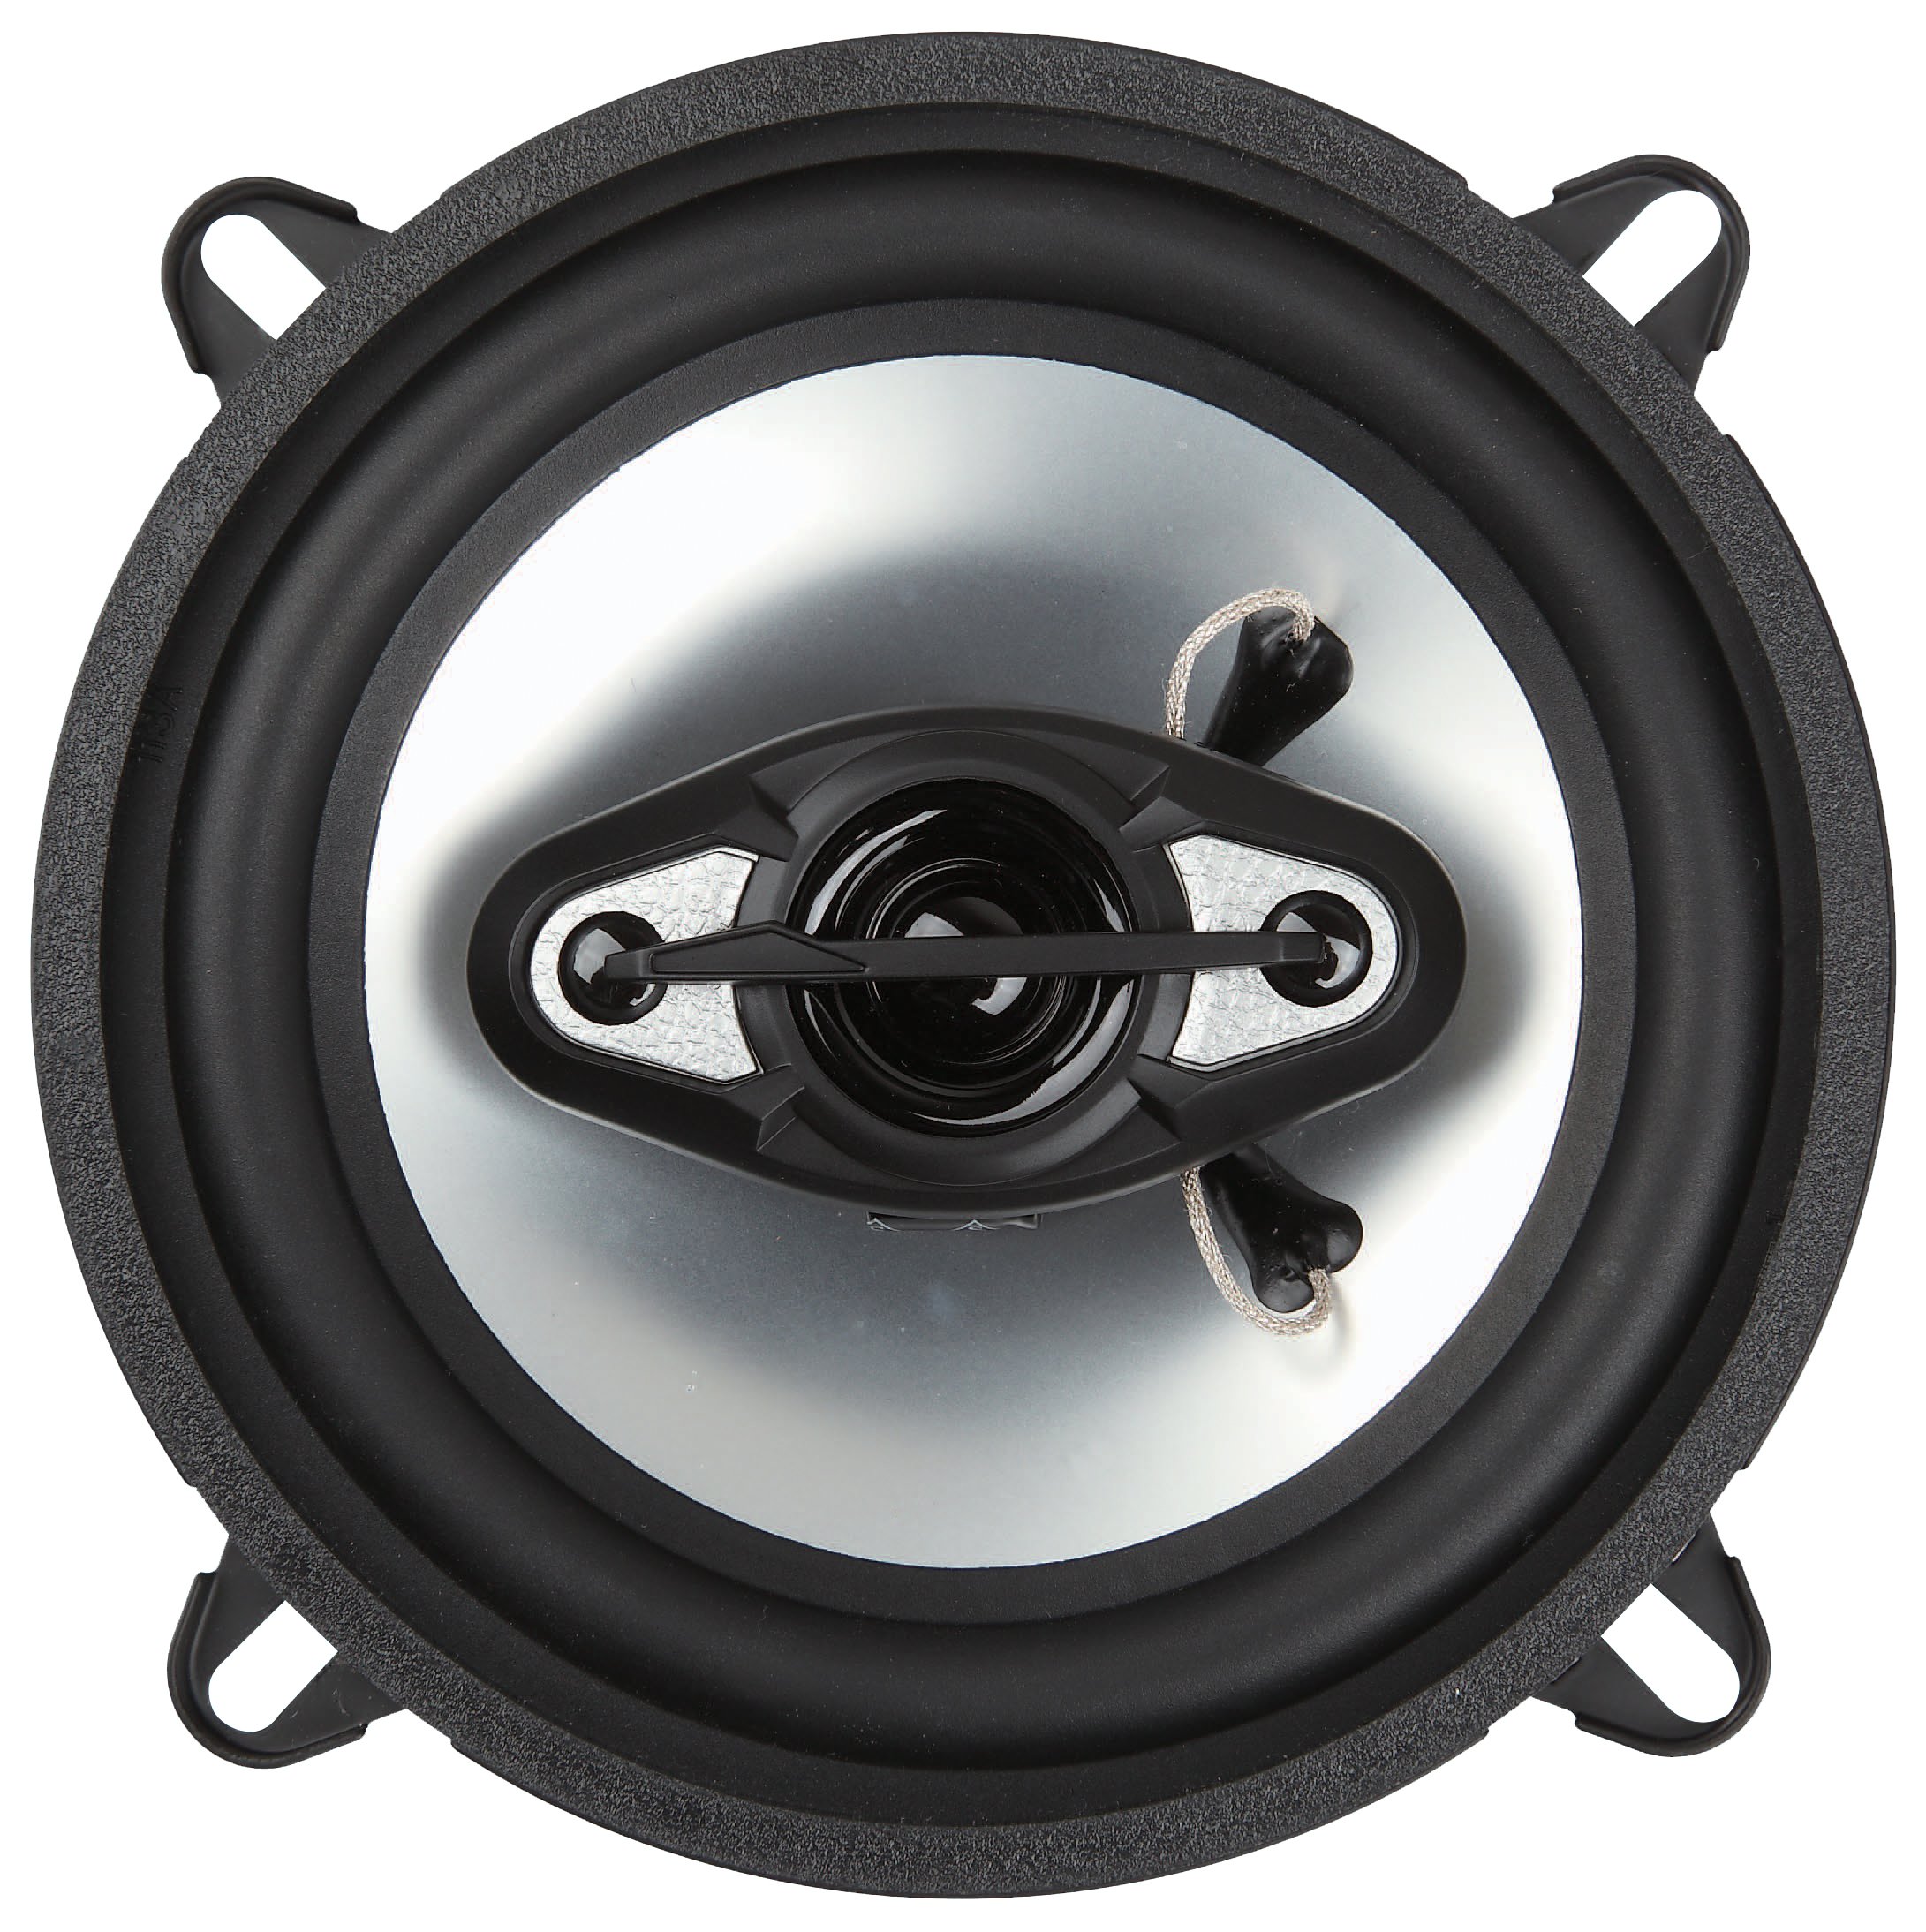 BOSS Audio Systems NX524 300 Watt Per Pair, 5.25 Inch, Full Range, 4 Way Car Speakers, Sold in Pairs